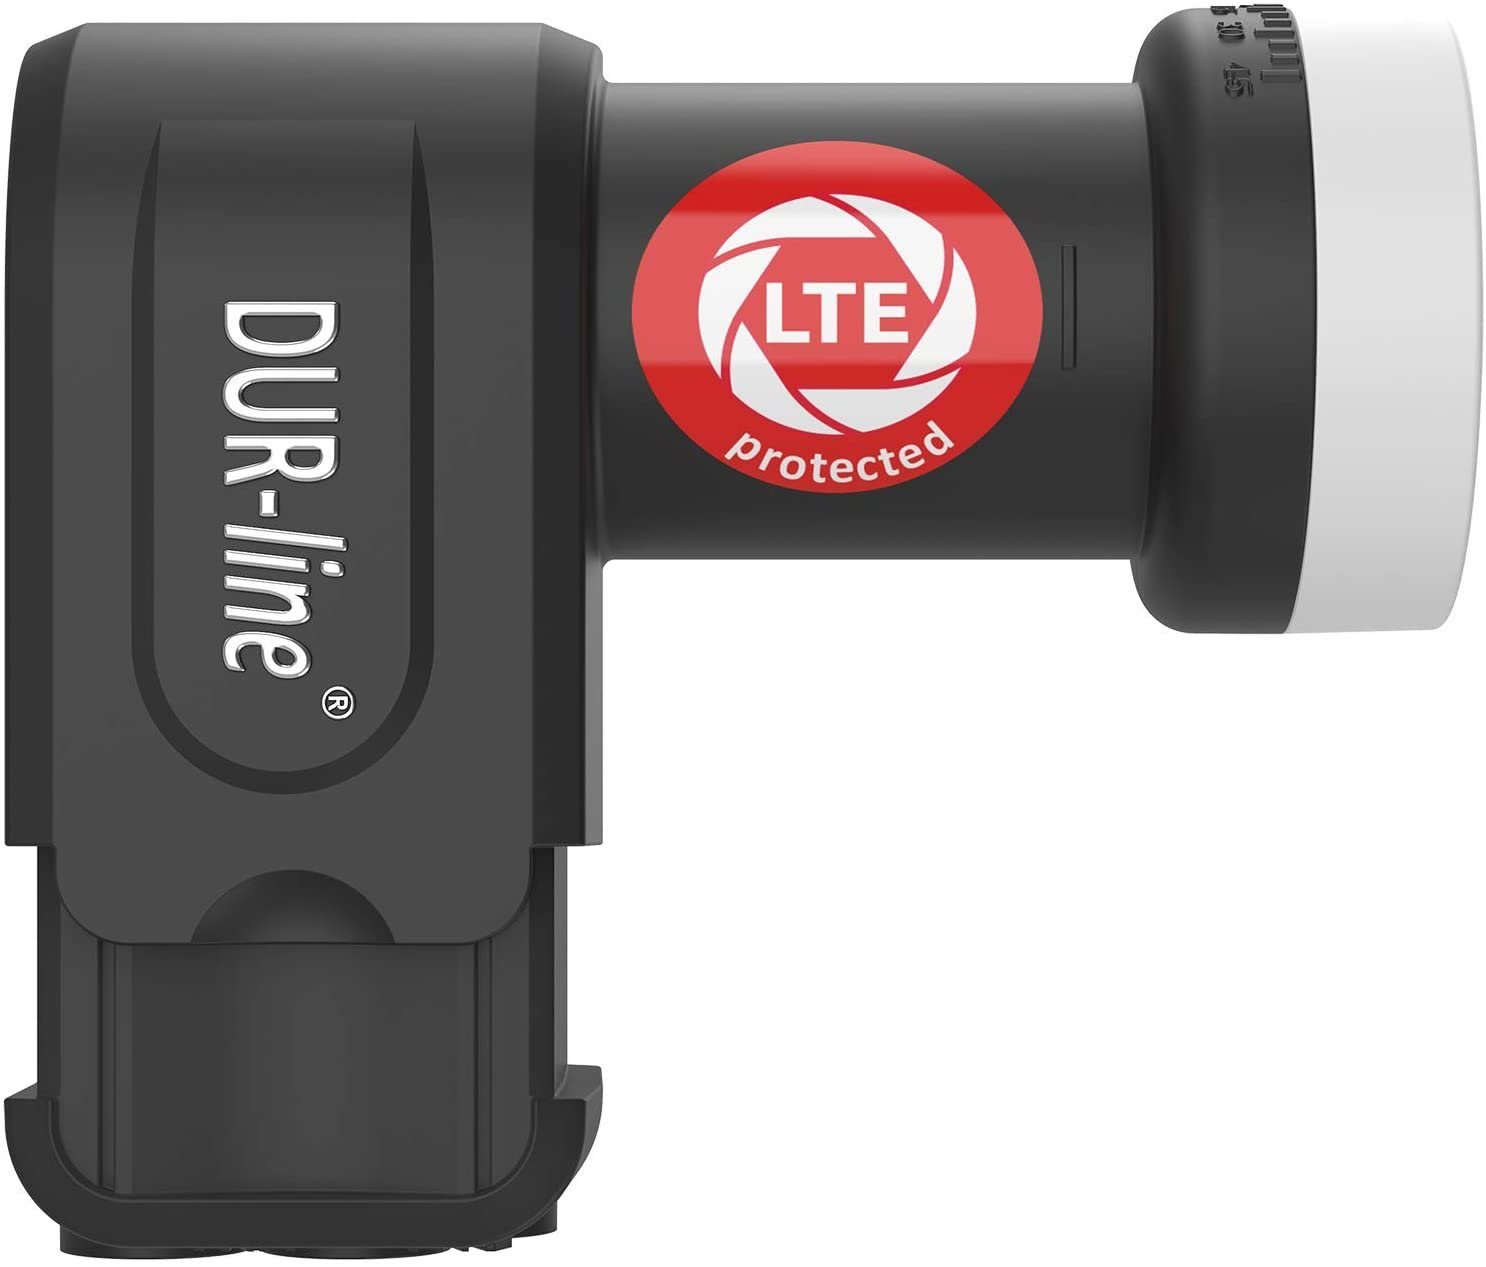 DUR-line +Ultra - mit LTE-Filter LNB Teilnehmer Quad Universal-Quad-LNB DUR-line 4 [ schwarz -